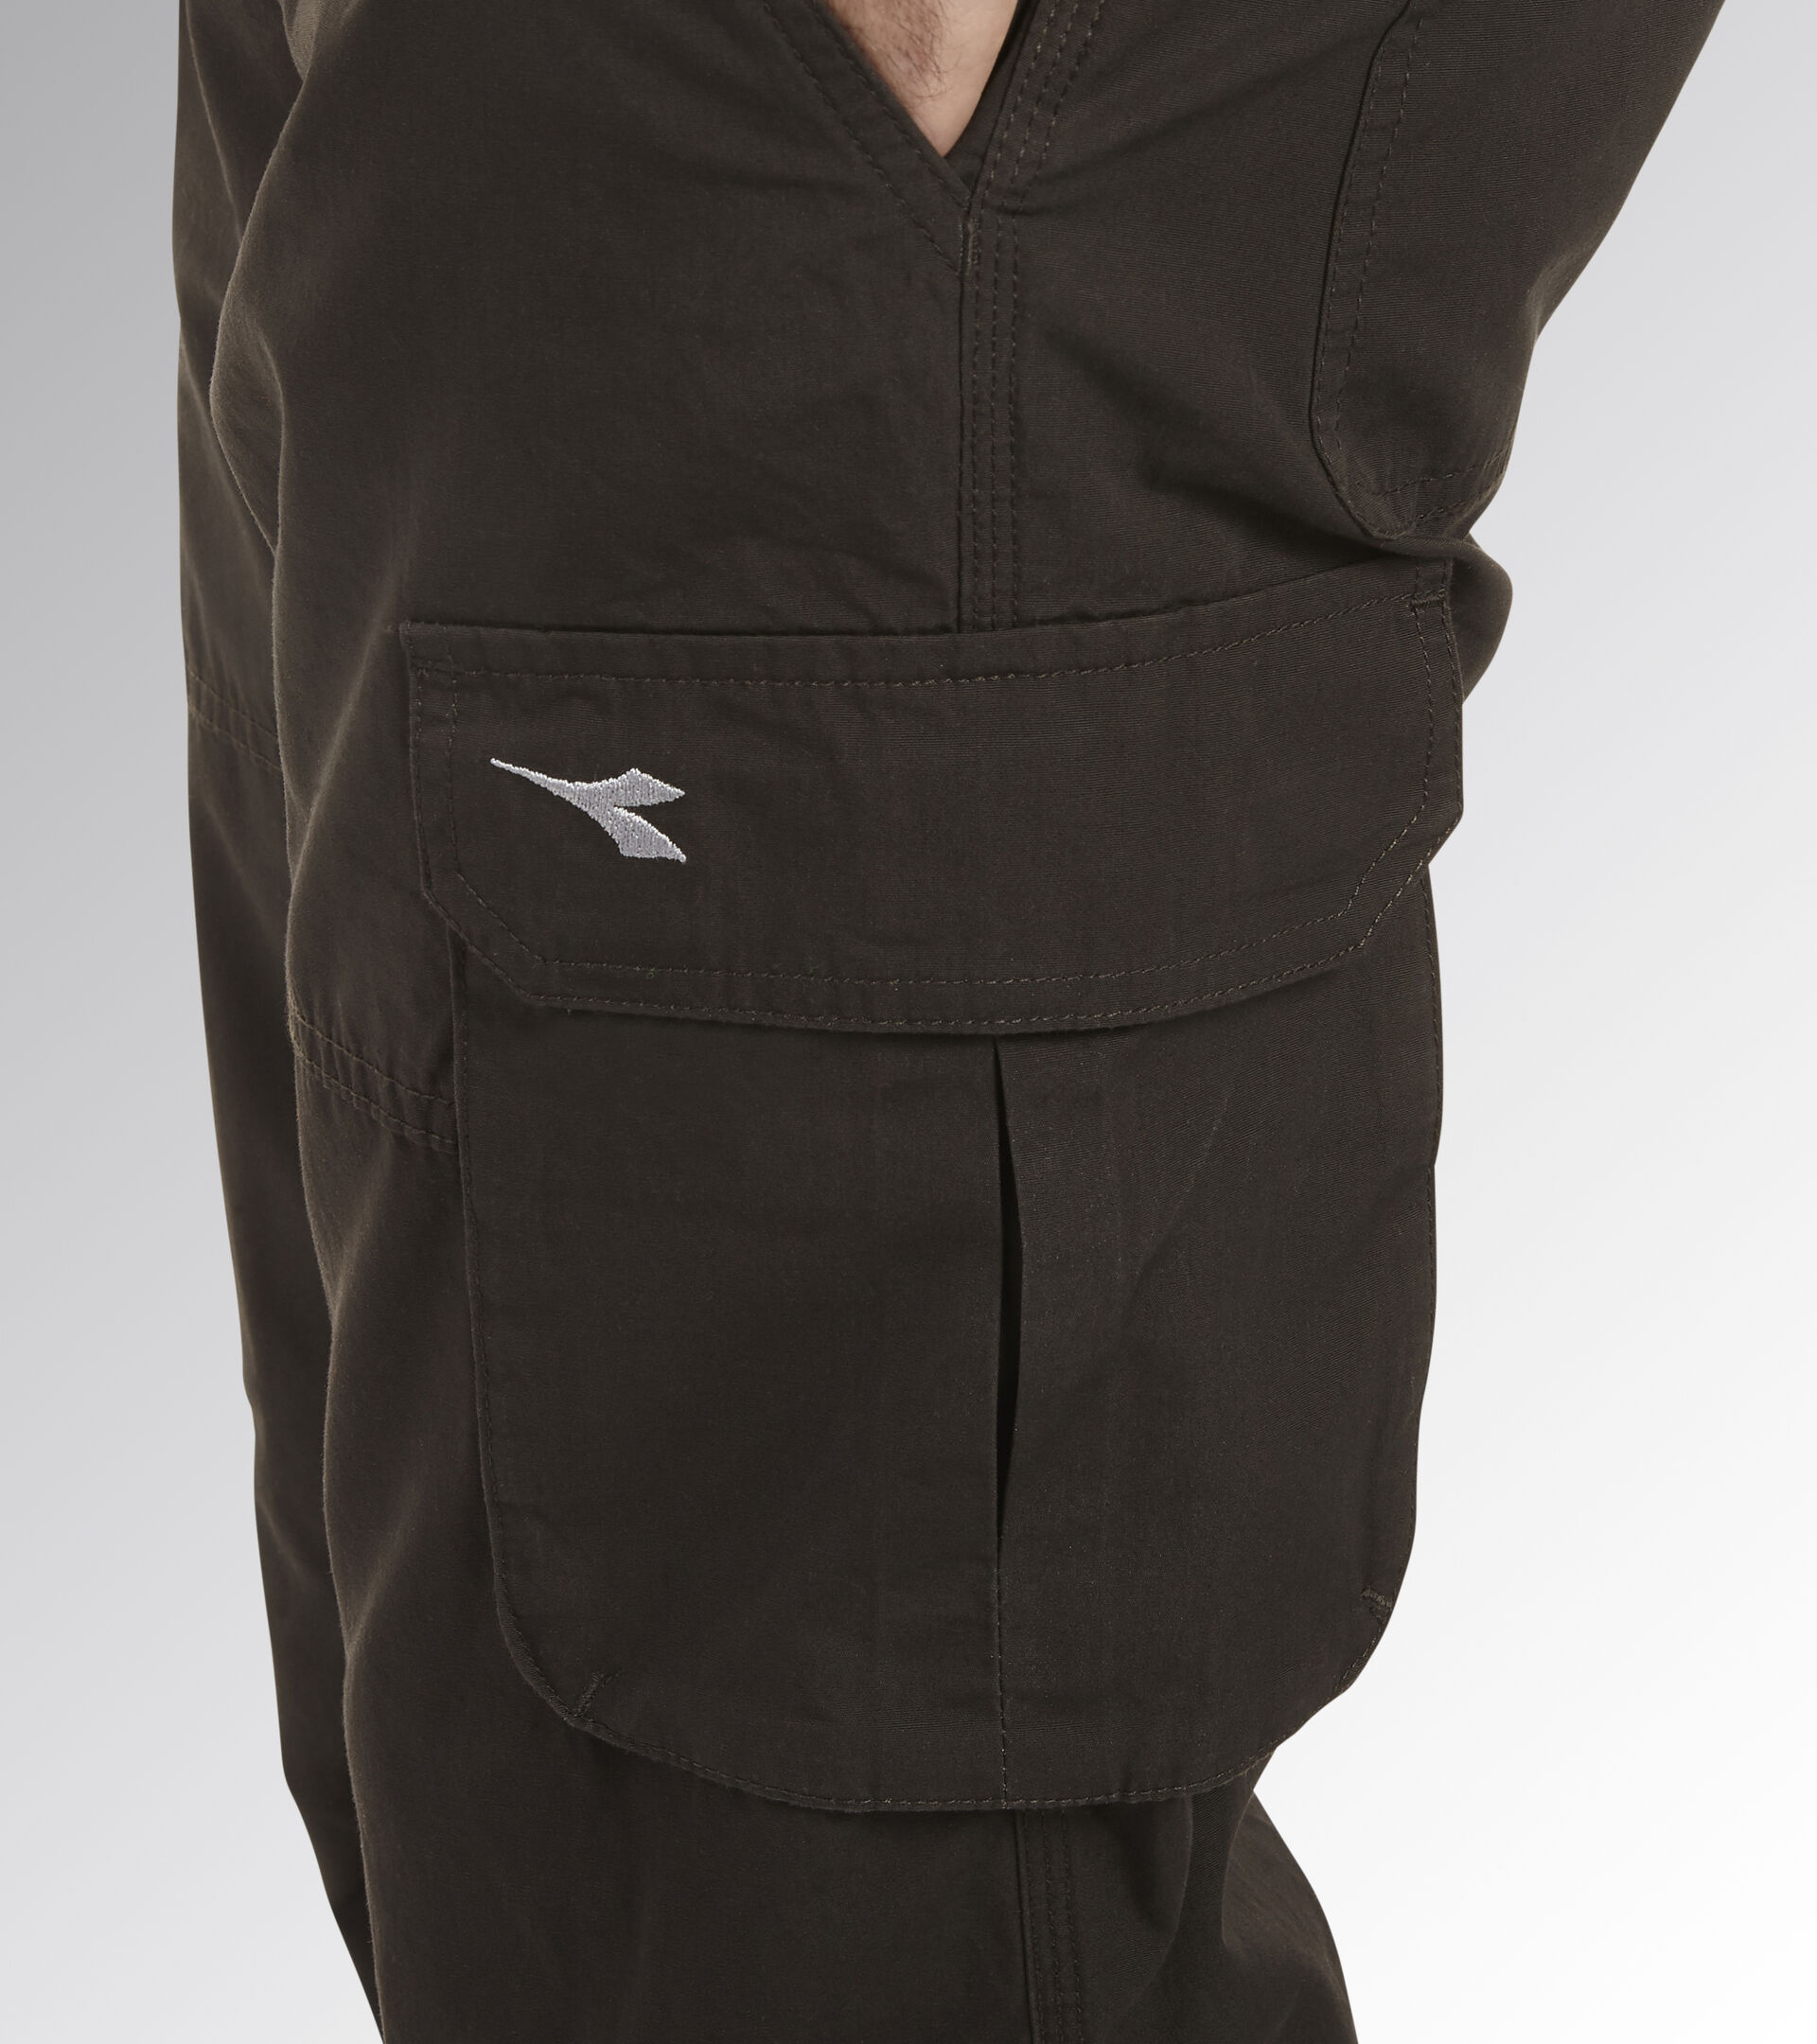 Work trousers PANT WIN CARGO BLACK FIR GREEN - Utility